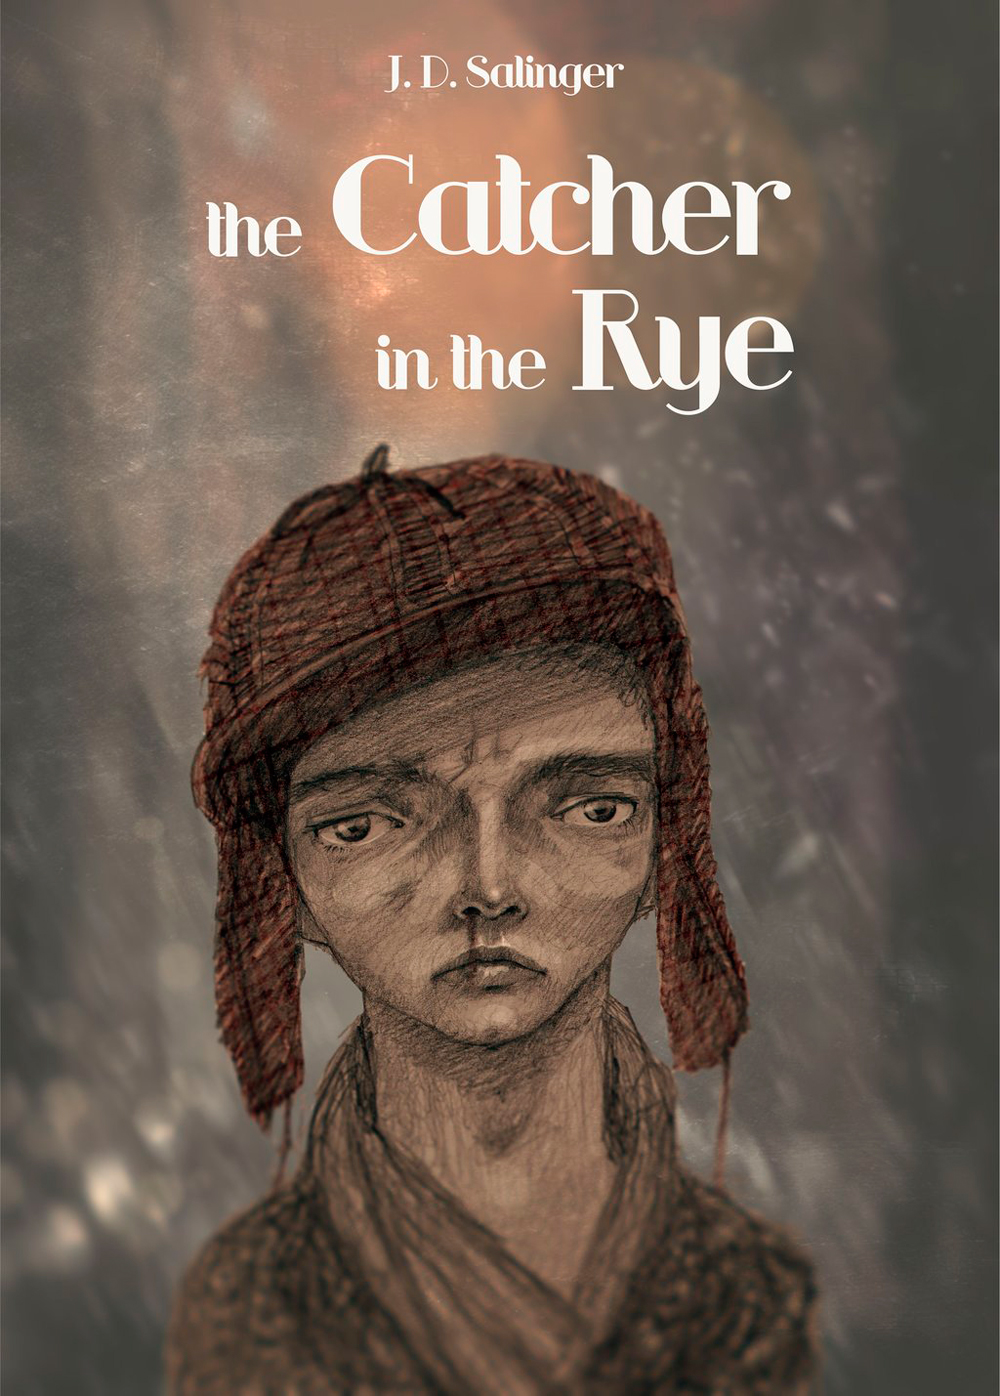 the catcher in the rye holden caulfield J.D. Salinger boy Character ILLUSTRATION  book cover odd